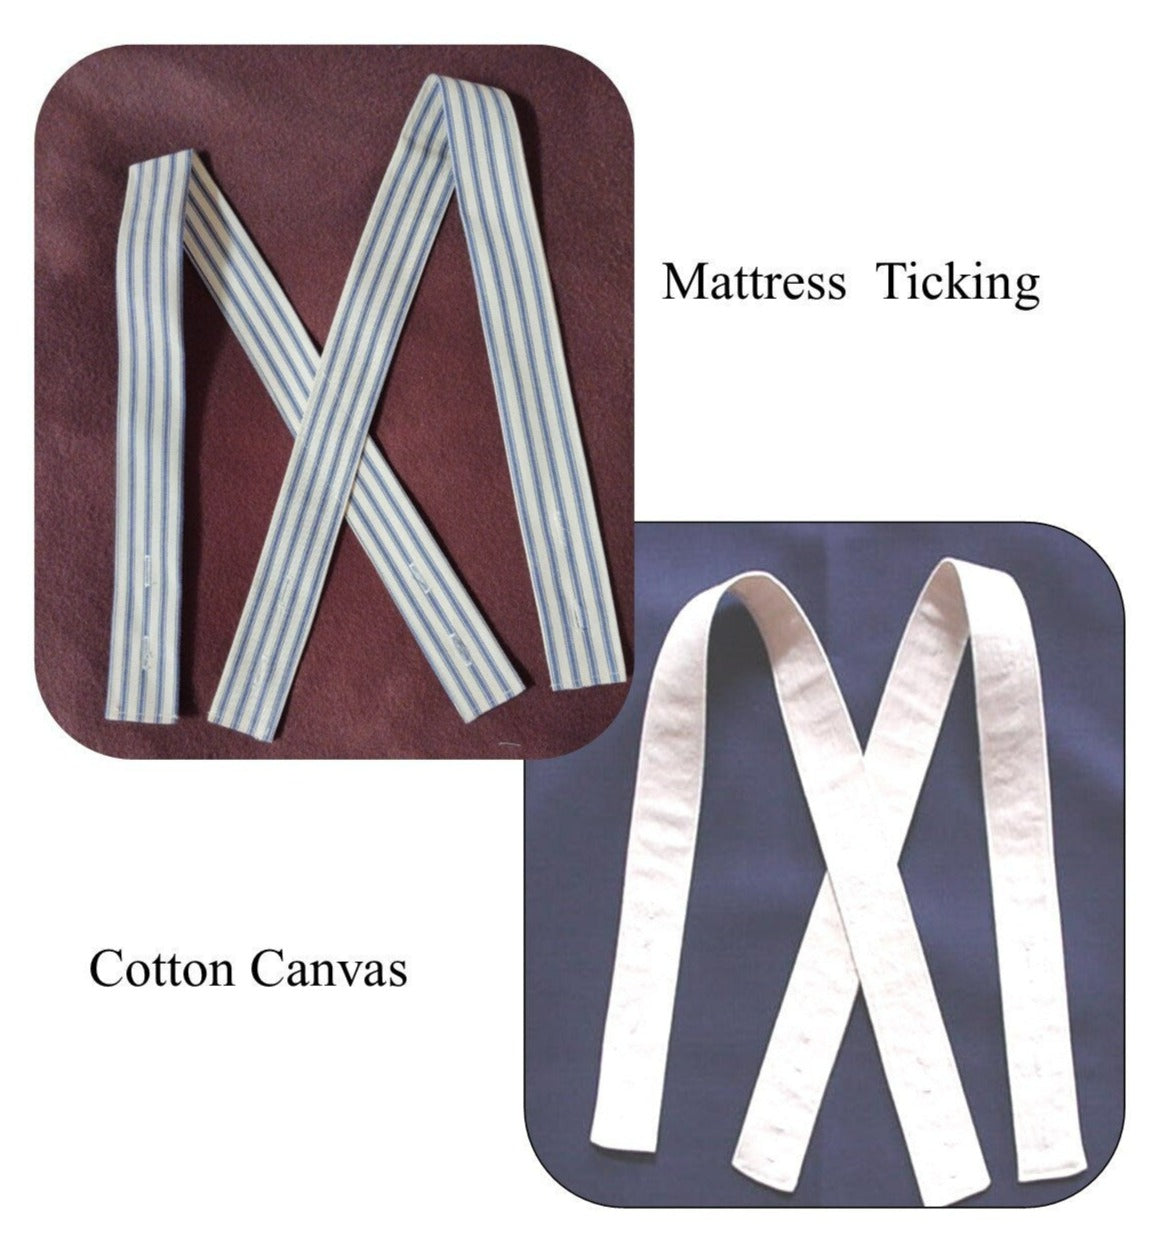 Button Braces/ Suspenders for men and boys - Victorian, 19th Century, civilian,military, Civil War re-enactor, mountain man, pioneer